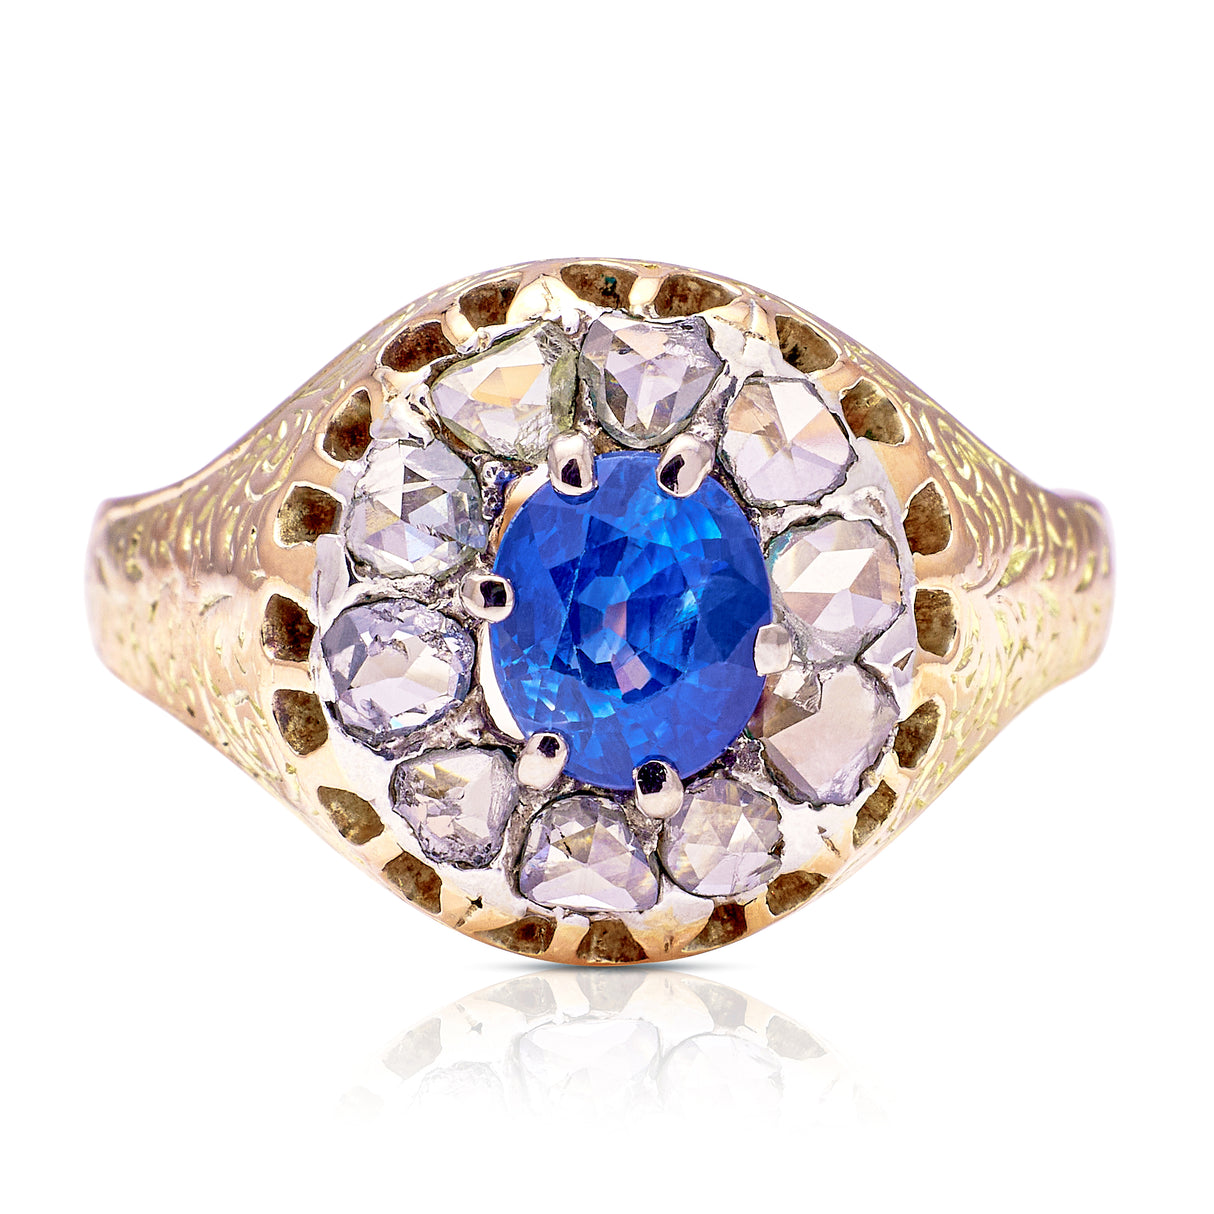 Antique, Victorian blue sapphire & rose-cut diamond daisy cluster ring